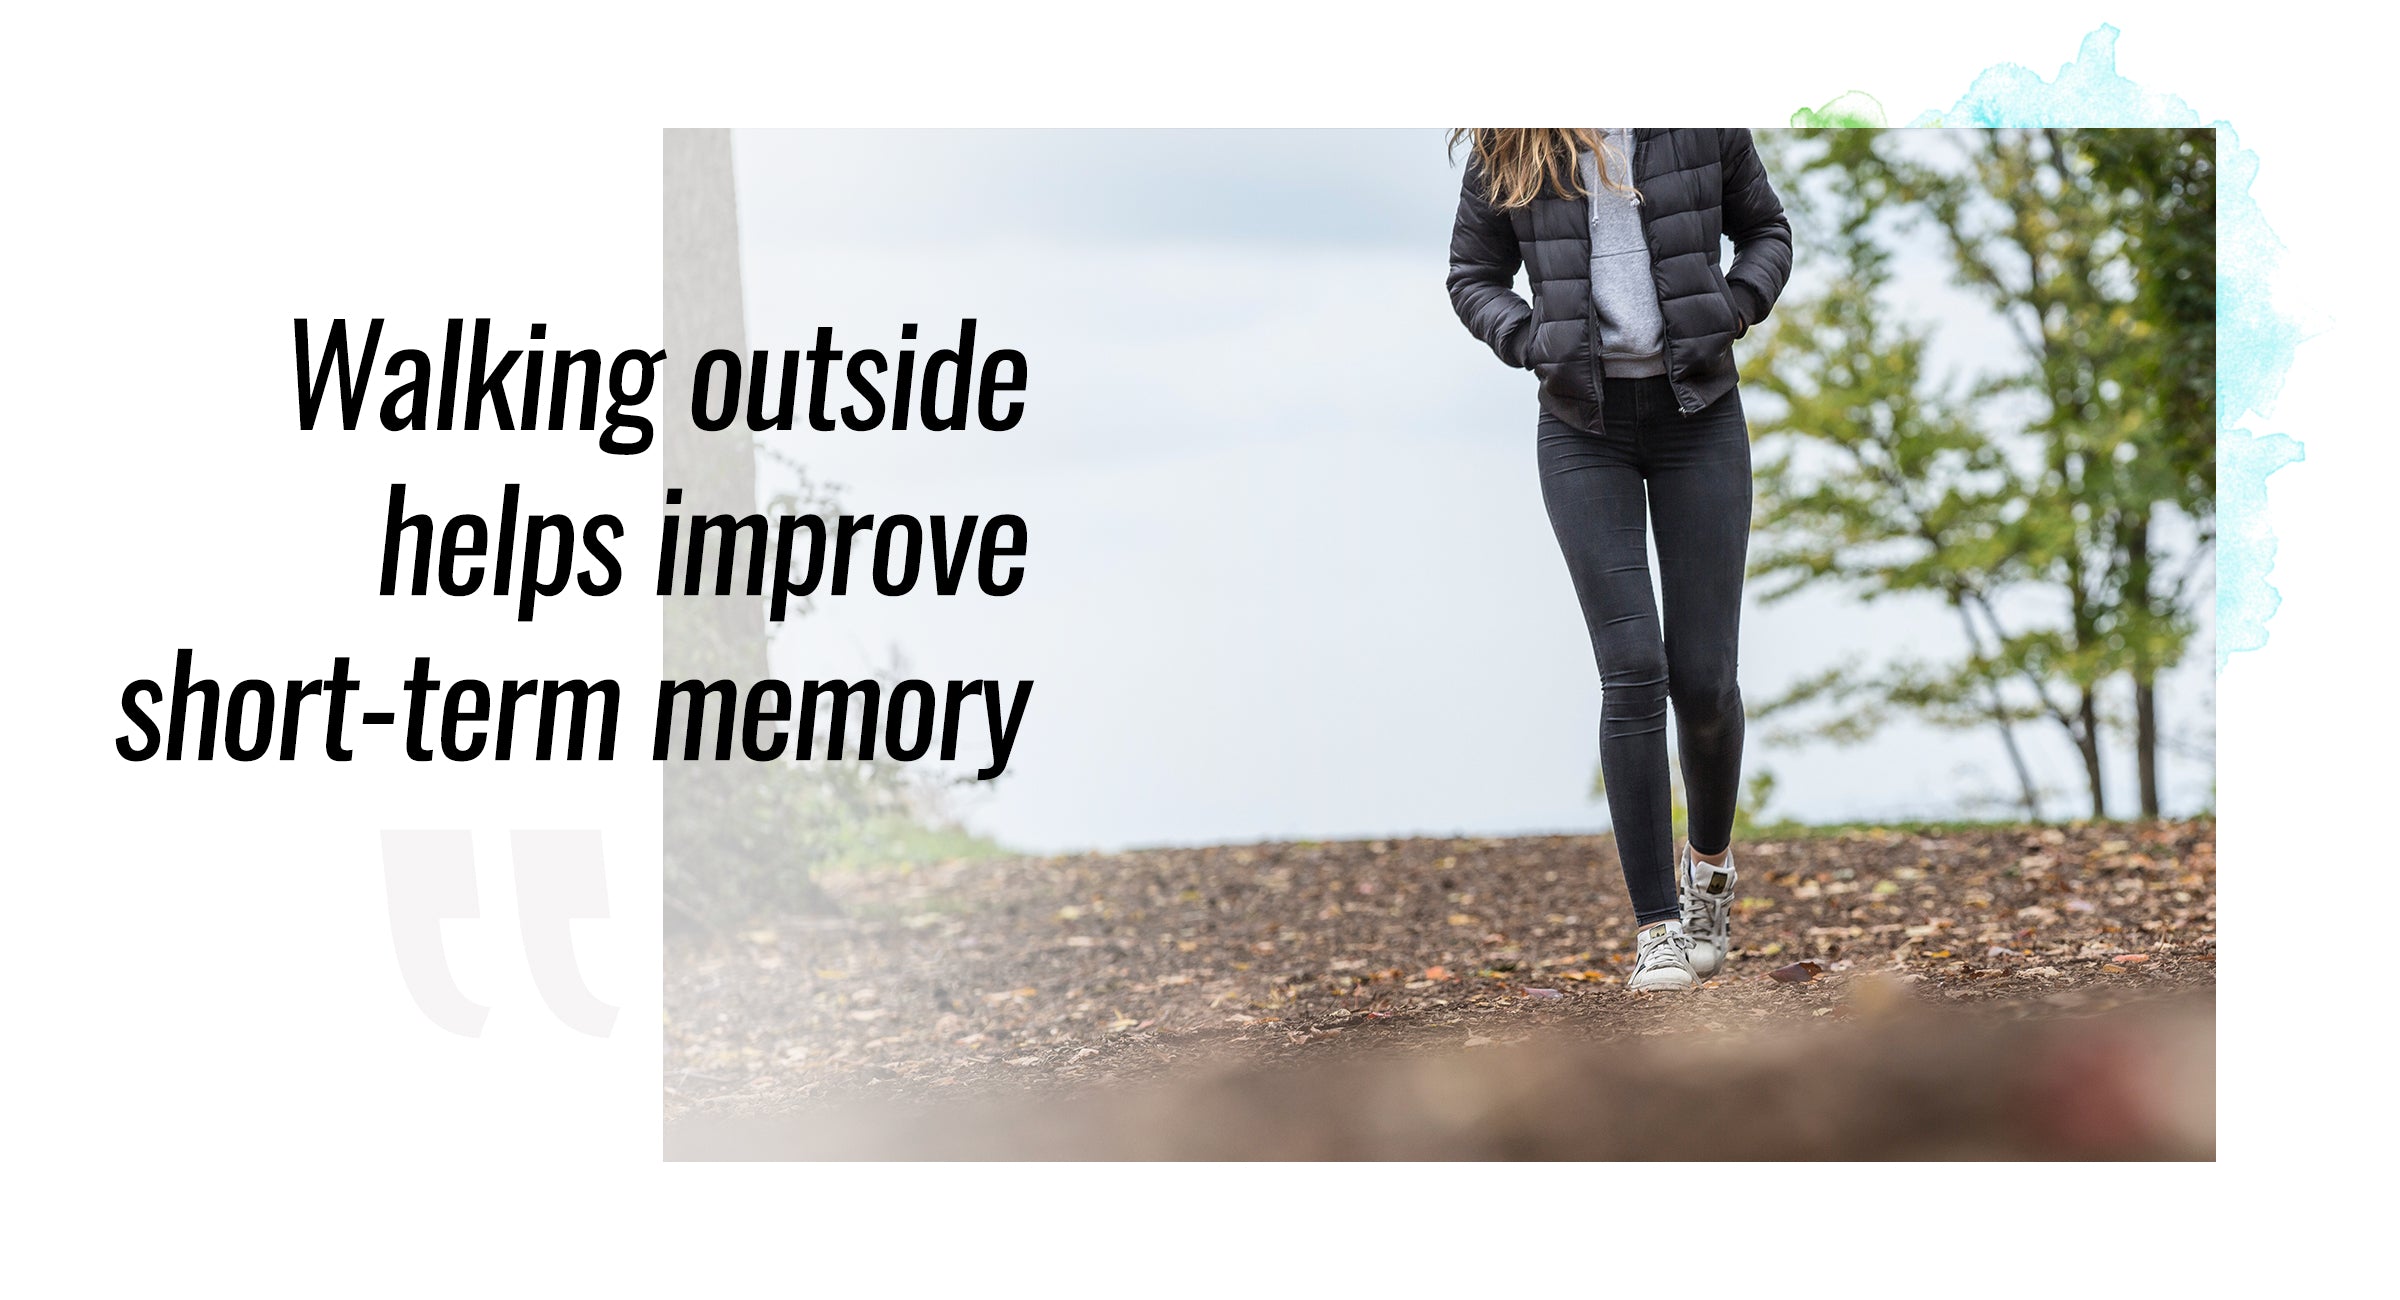 Walking outside helps improve short-term memory